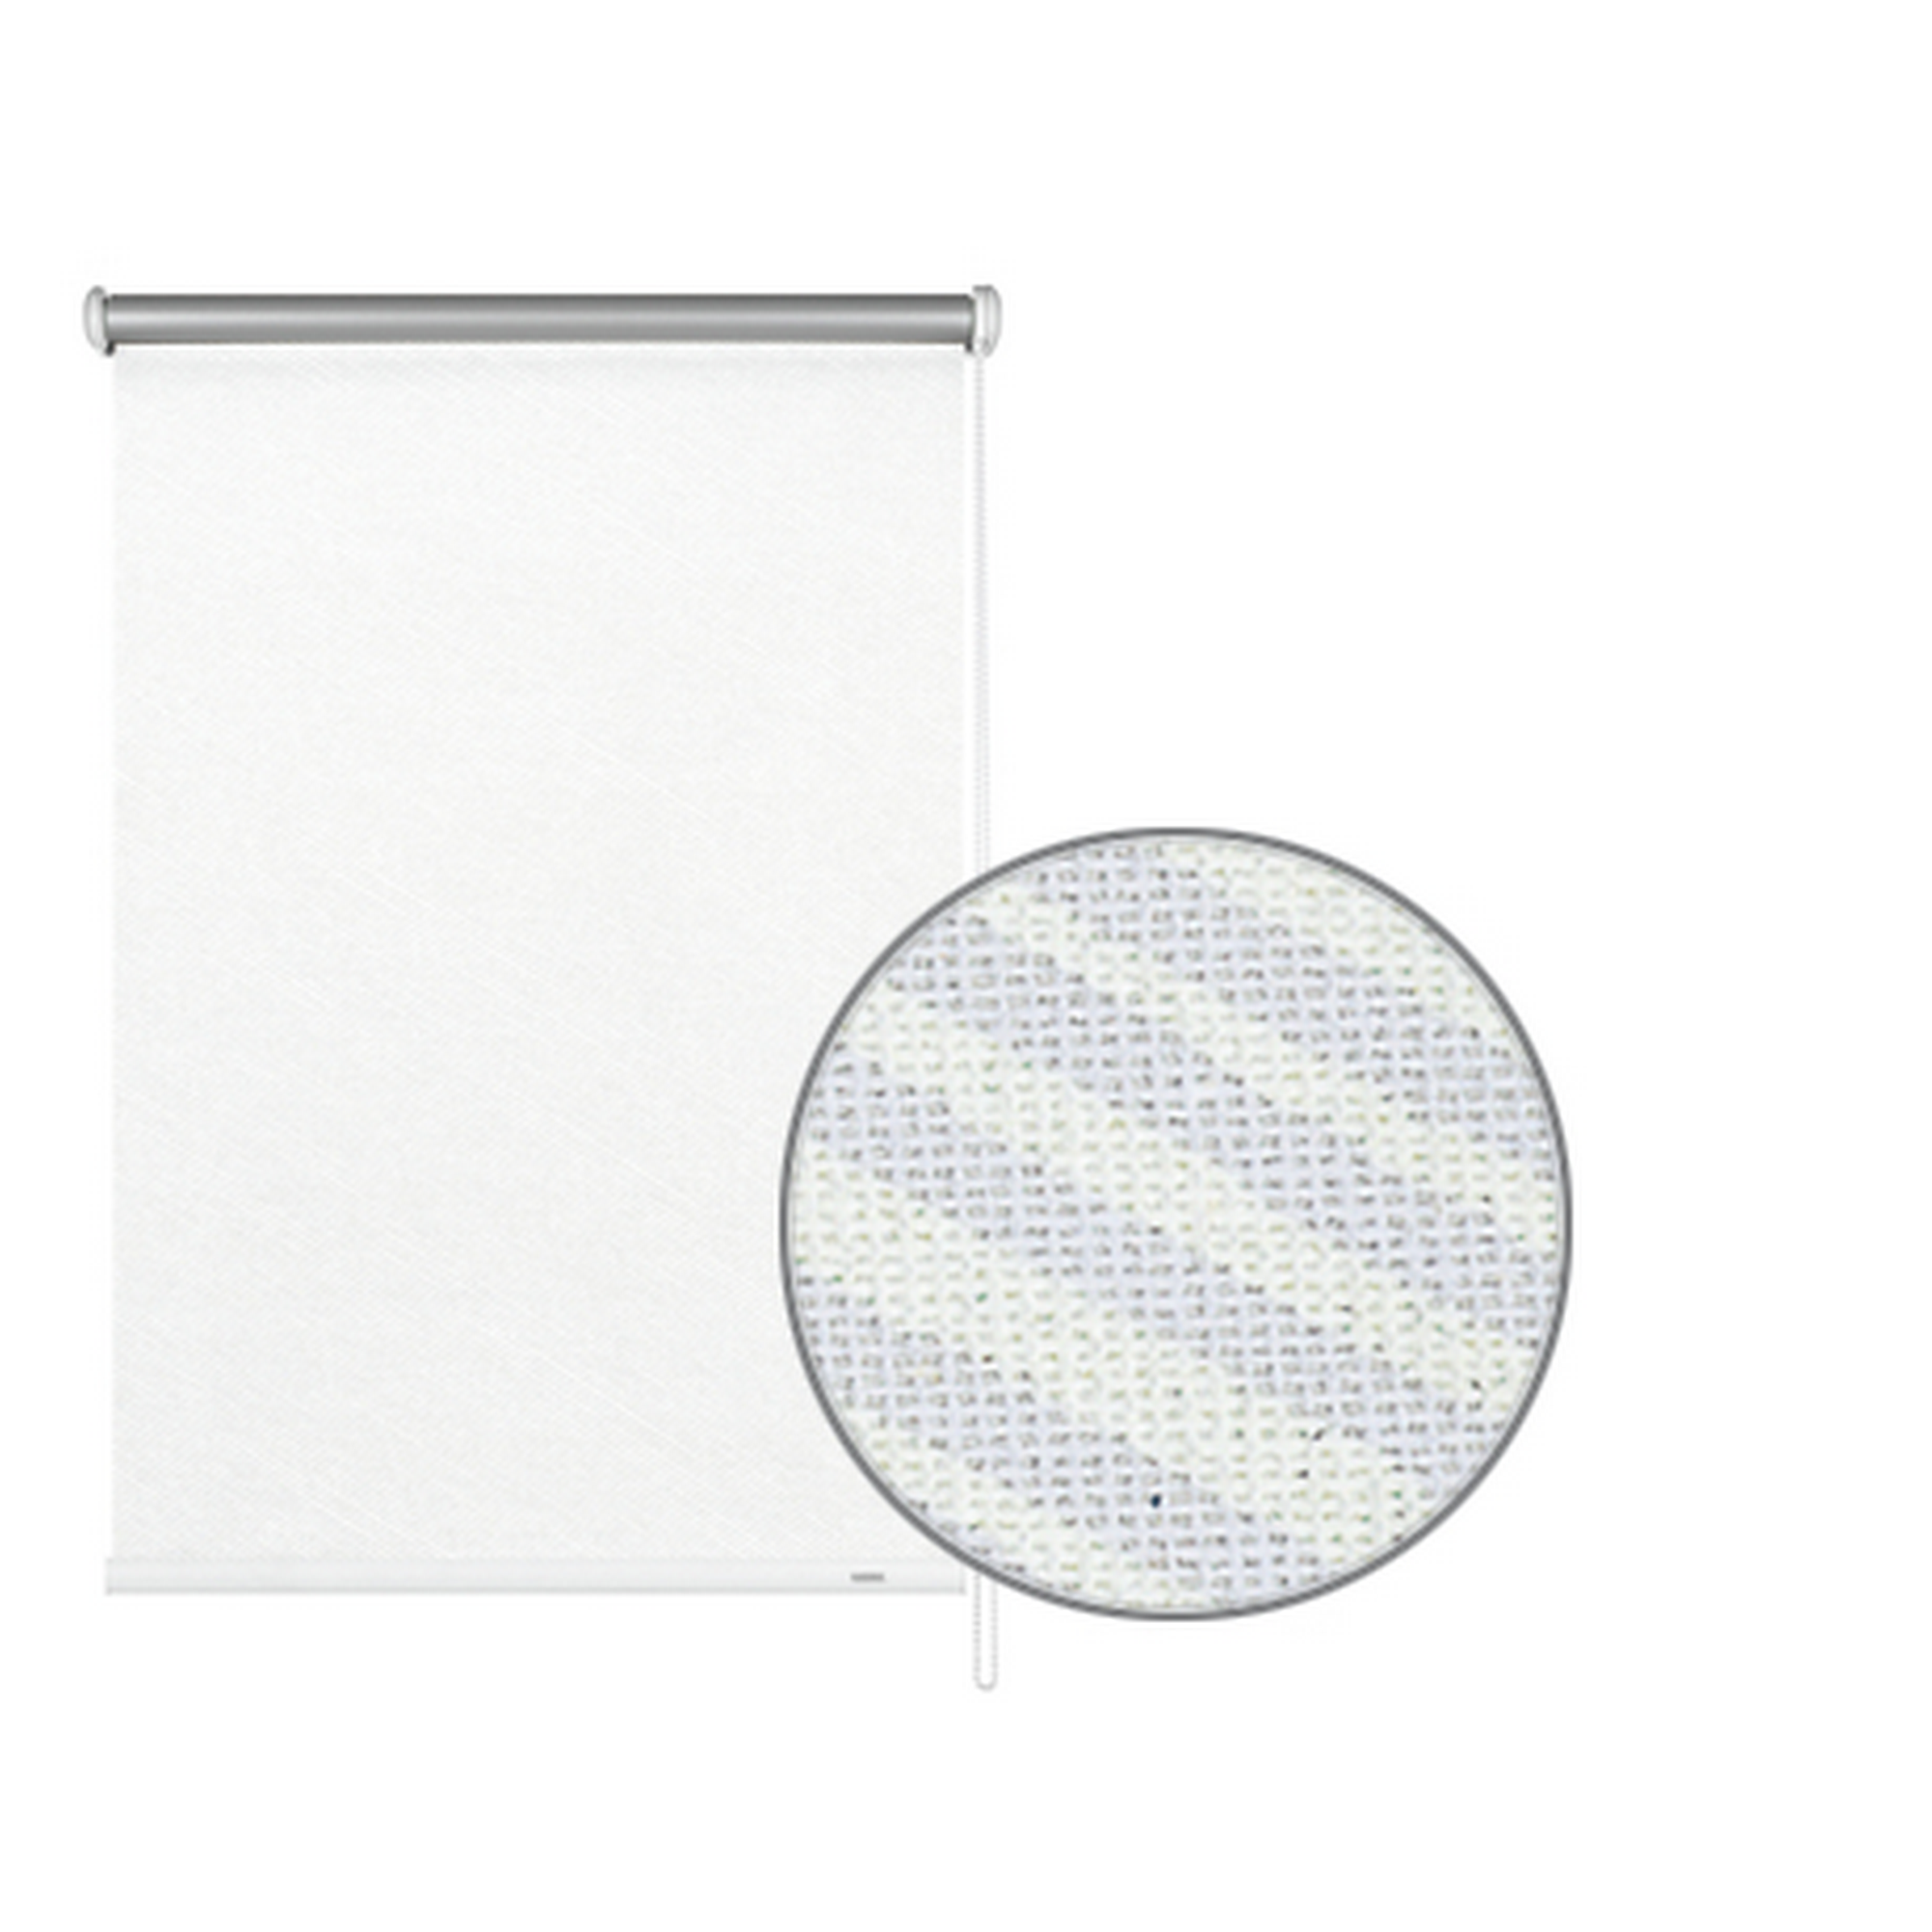 Gardinia Seitenzug-Rollo ‚Thermo energiesparend‘ Streifen weiß 182 x 180 cm